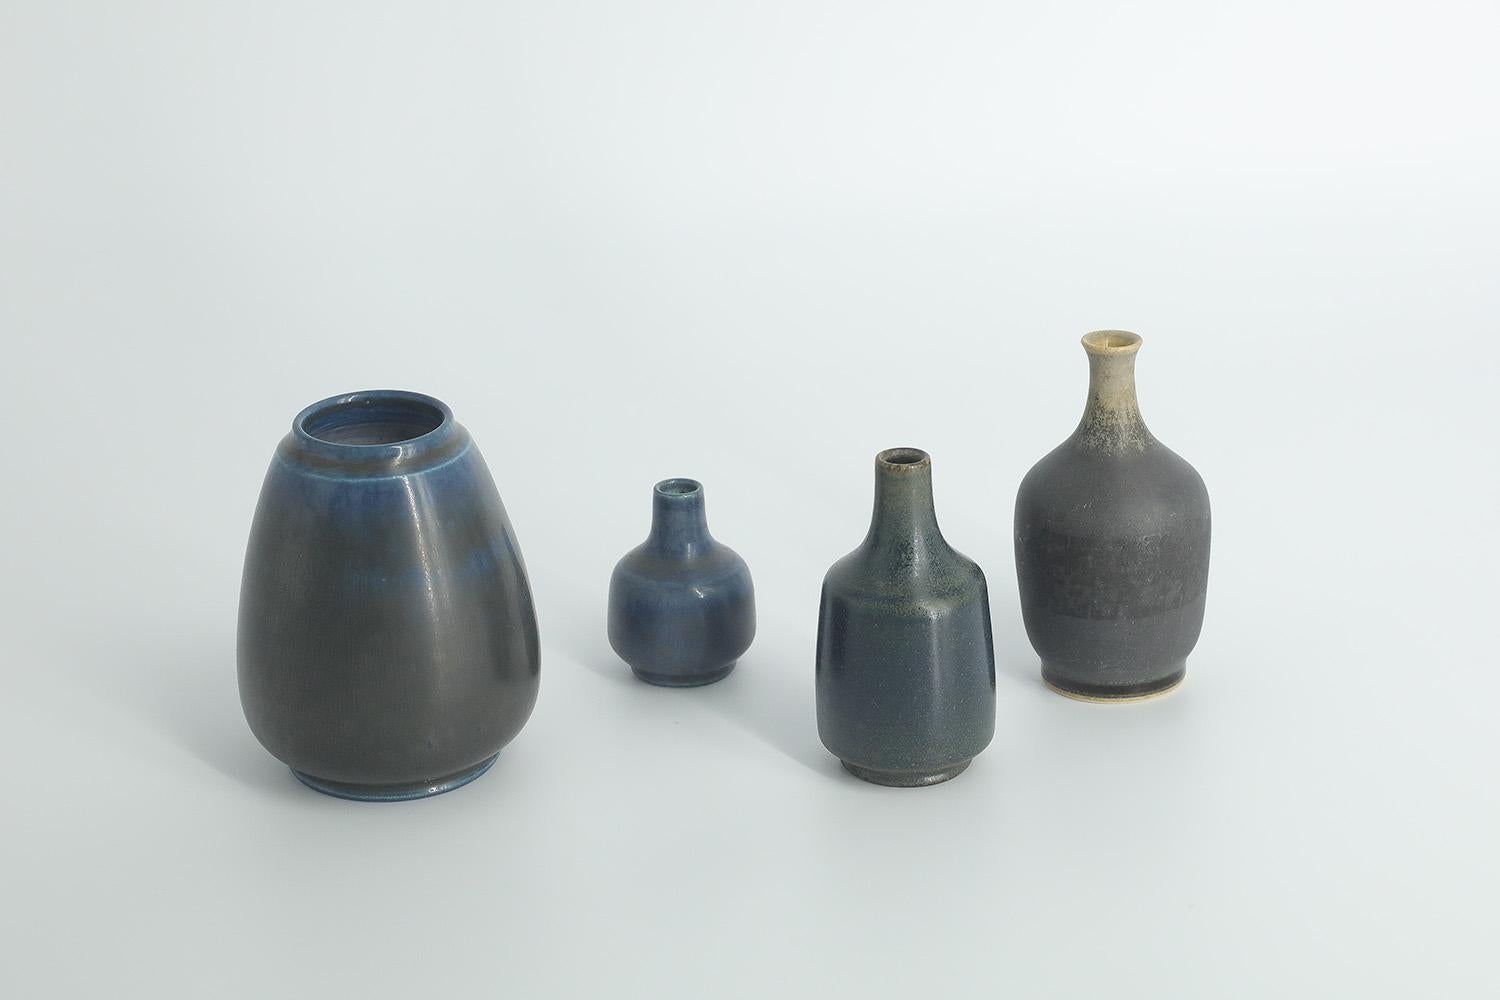 1. Height 8 cm | Width 6 cm | Depth 6 cm
2. Height 8 cm | Width 3.5 cm | Depth 3.5 cm
3. Height 7 cm | Width 3.5 cm | Depth 3.5 cm
4. Height 4.5 cm | Width 3 cm | Depth 3 cm

This set of 4 miniature vases was designed by Gunnar Borg for the Swedish